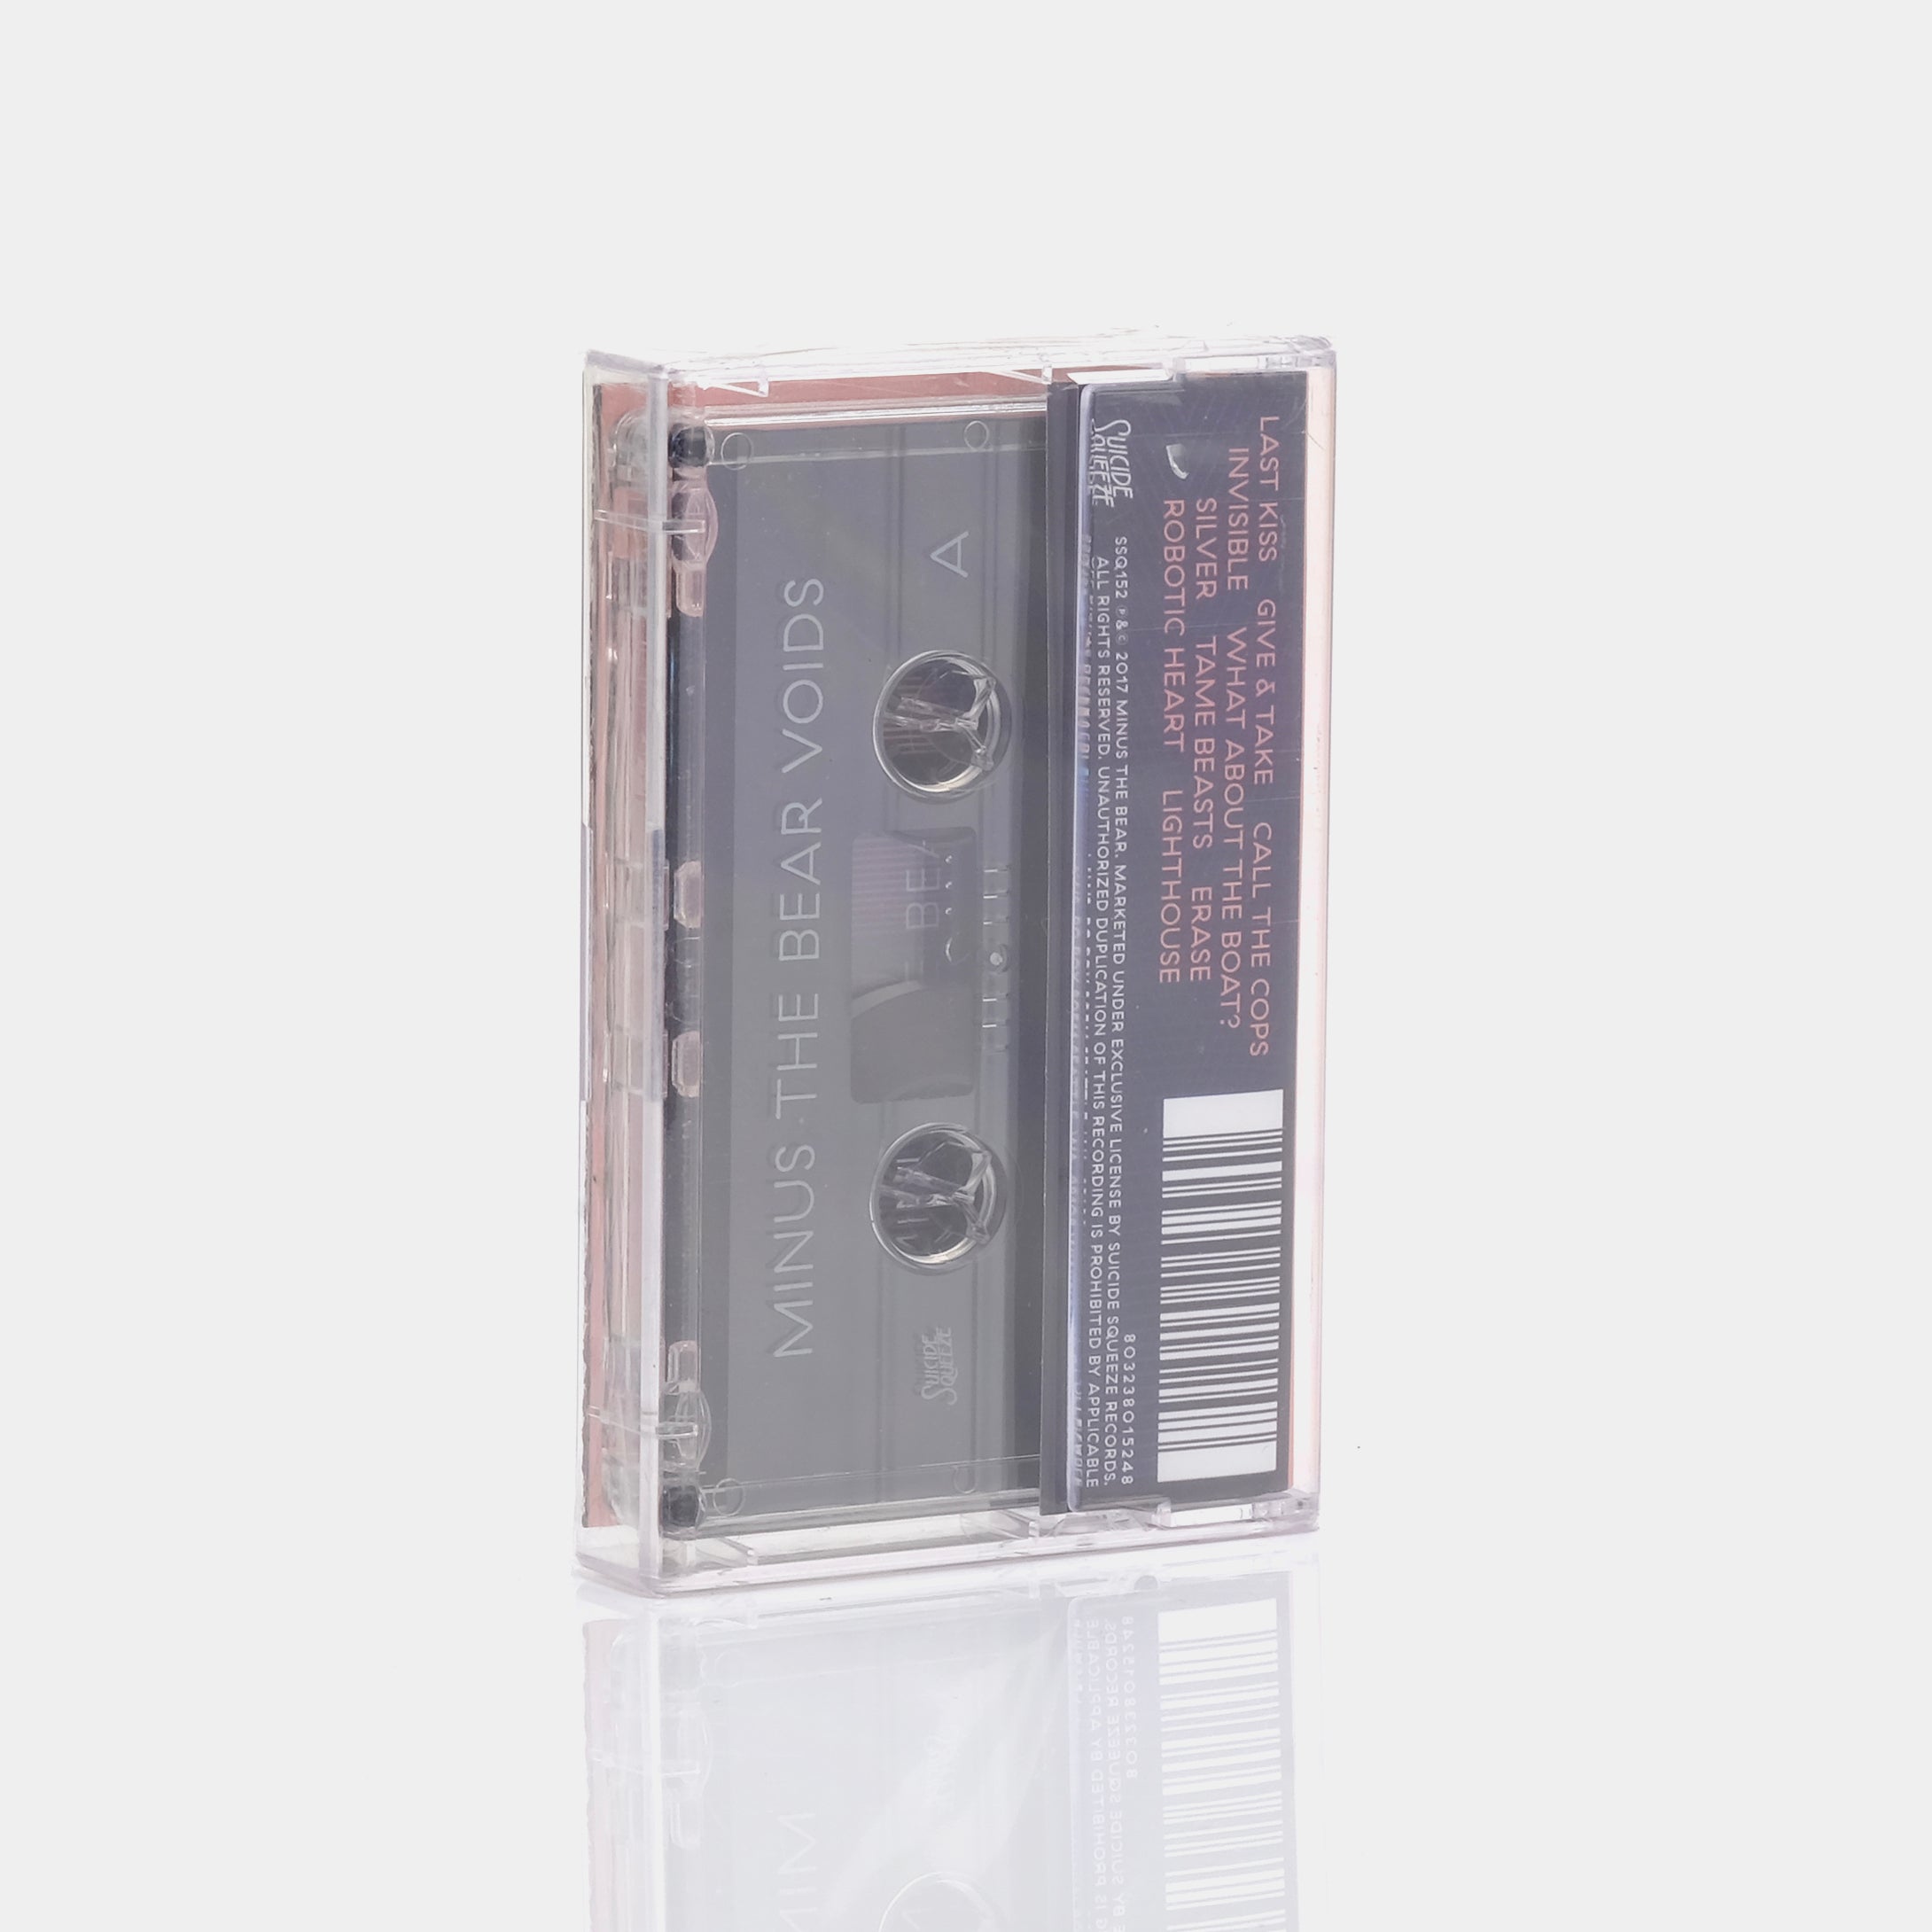 Minus The Bear - Voids Cassette Tape